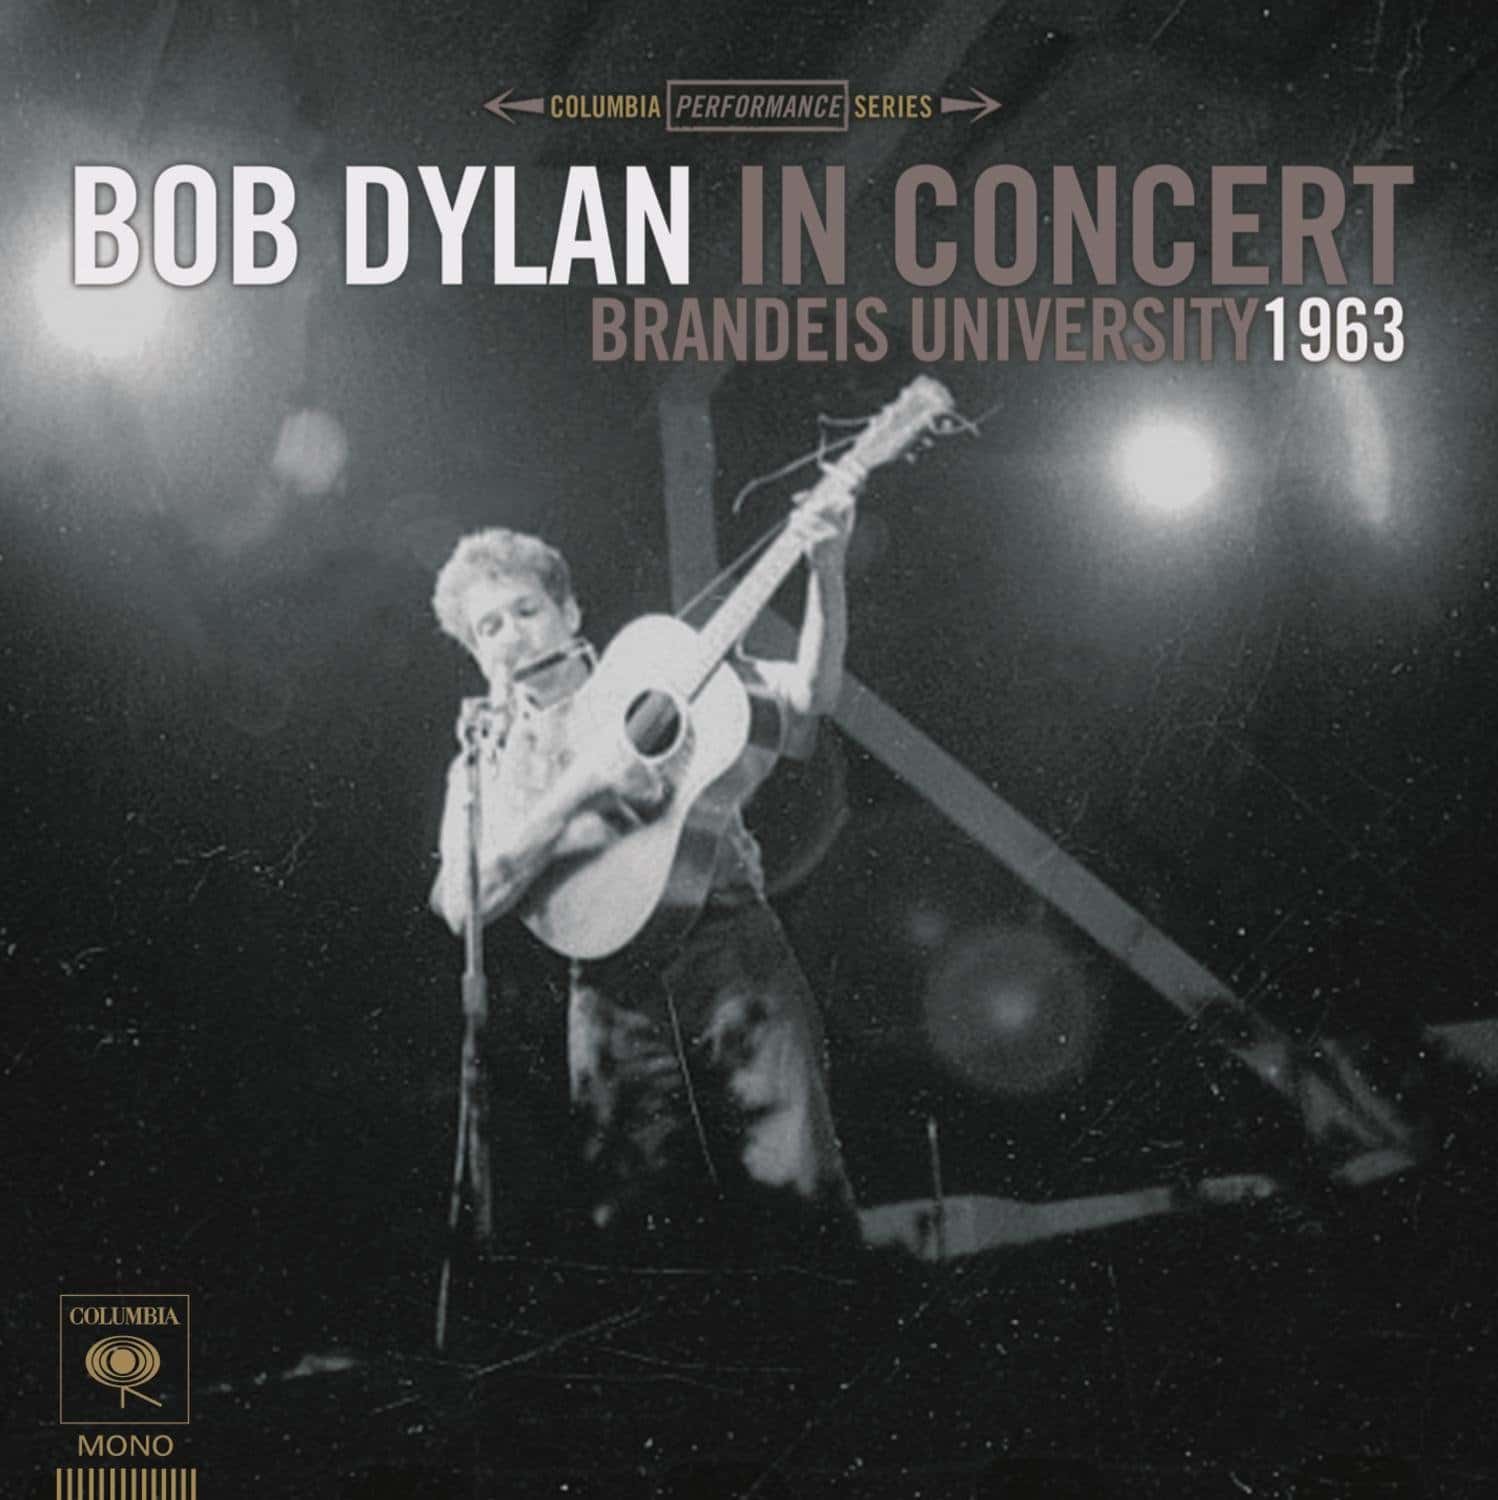 Bob Dylan - Bob Dylan In Concert Brandeis University 1963 - 889854382612 - COLUMBIA